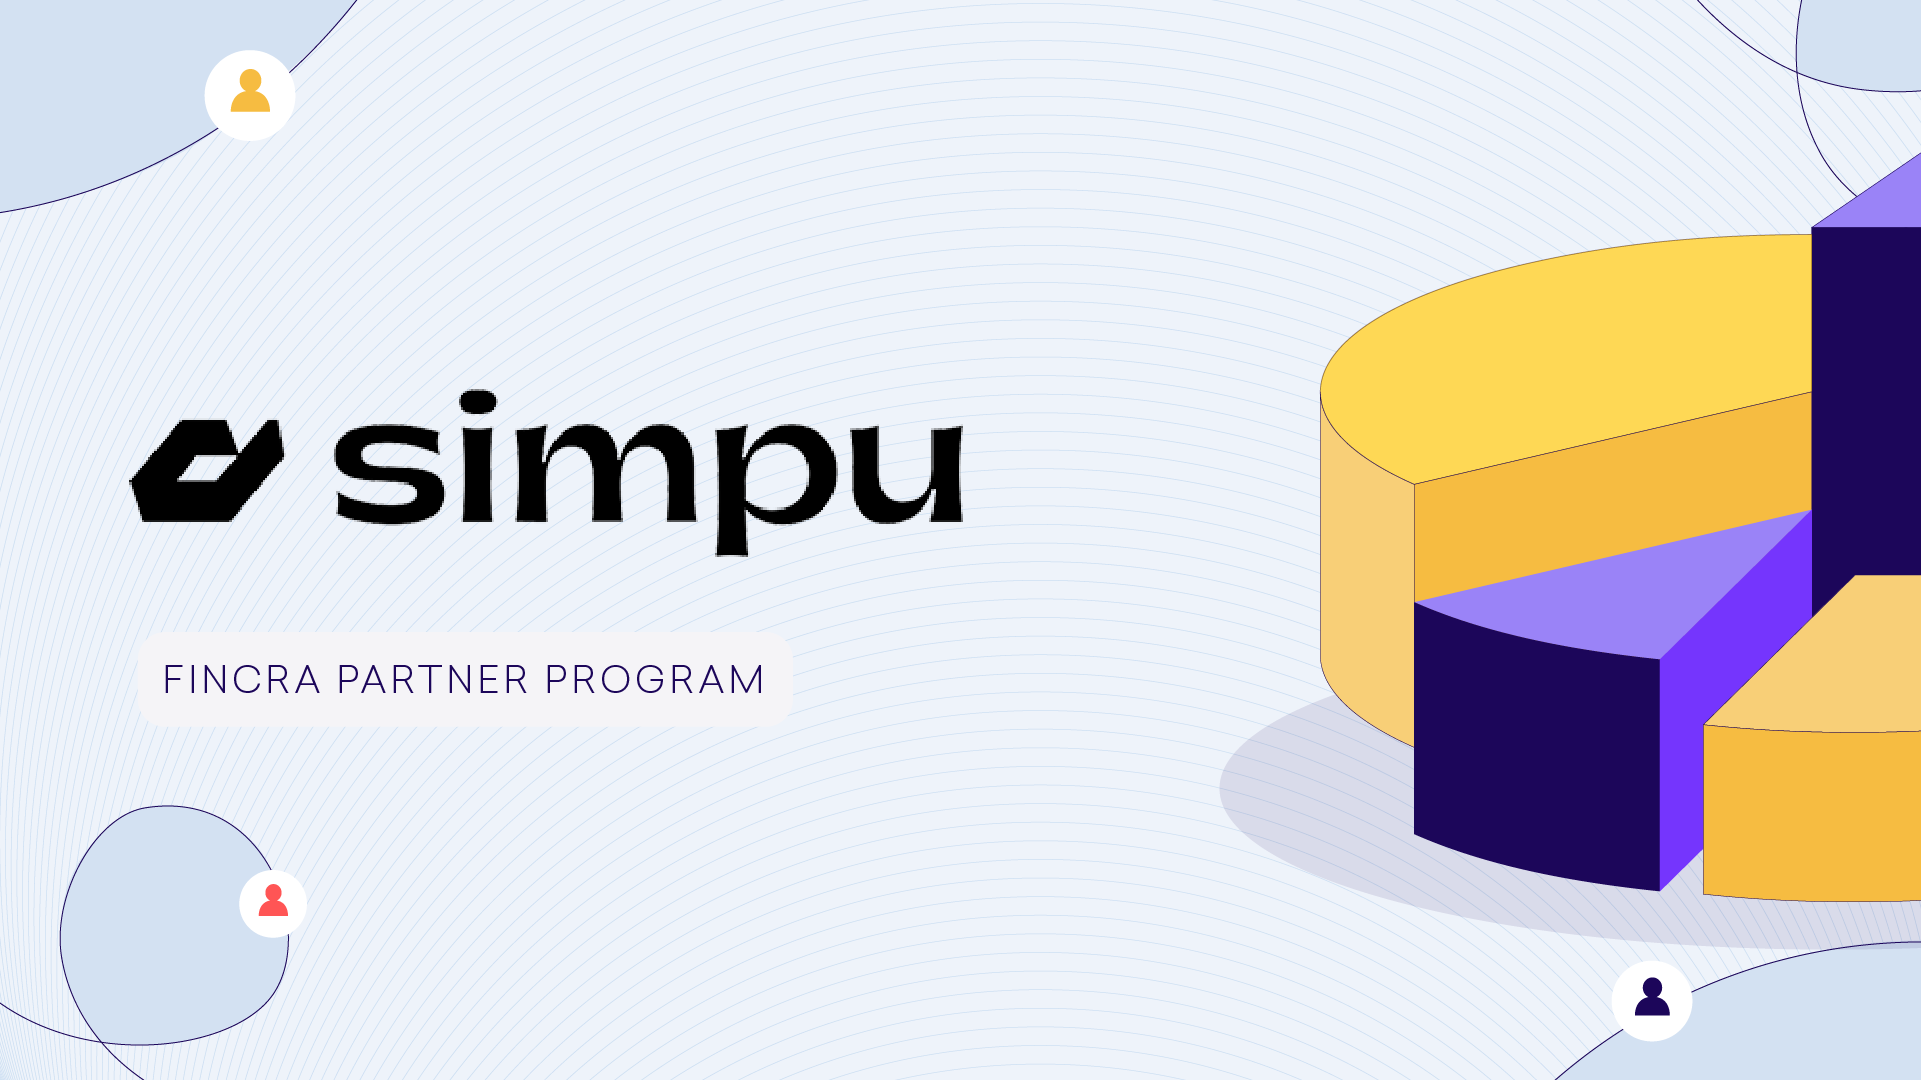 Fincra Partner Program: Simpu as a Perk Partner